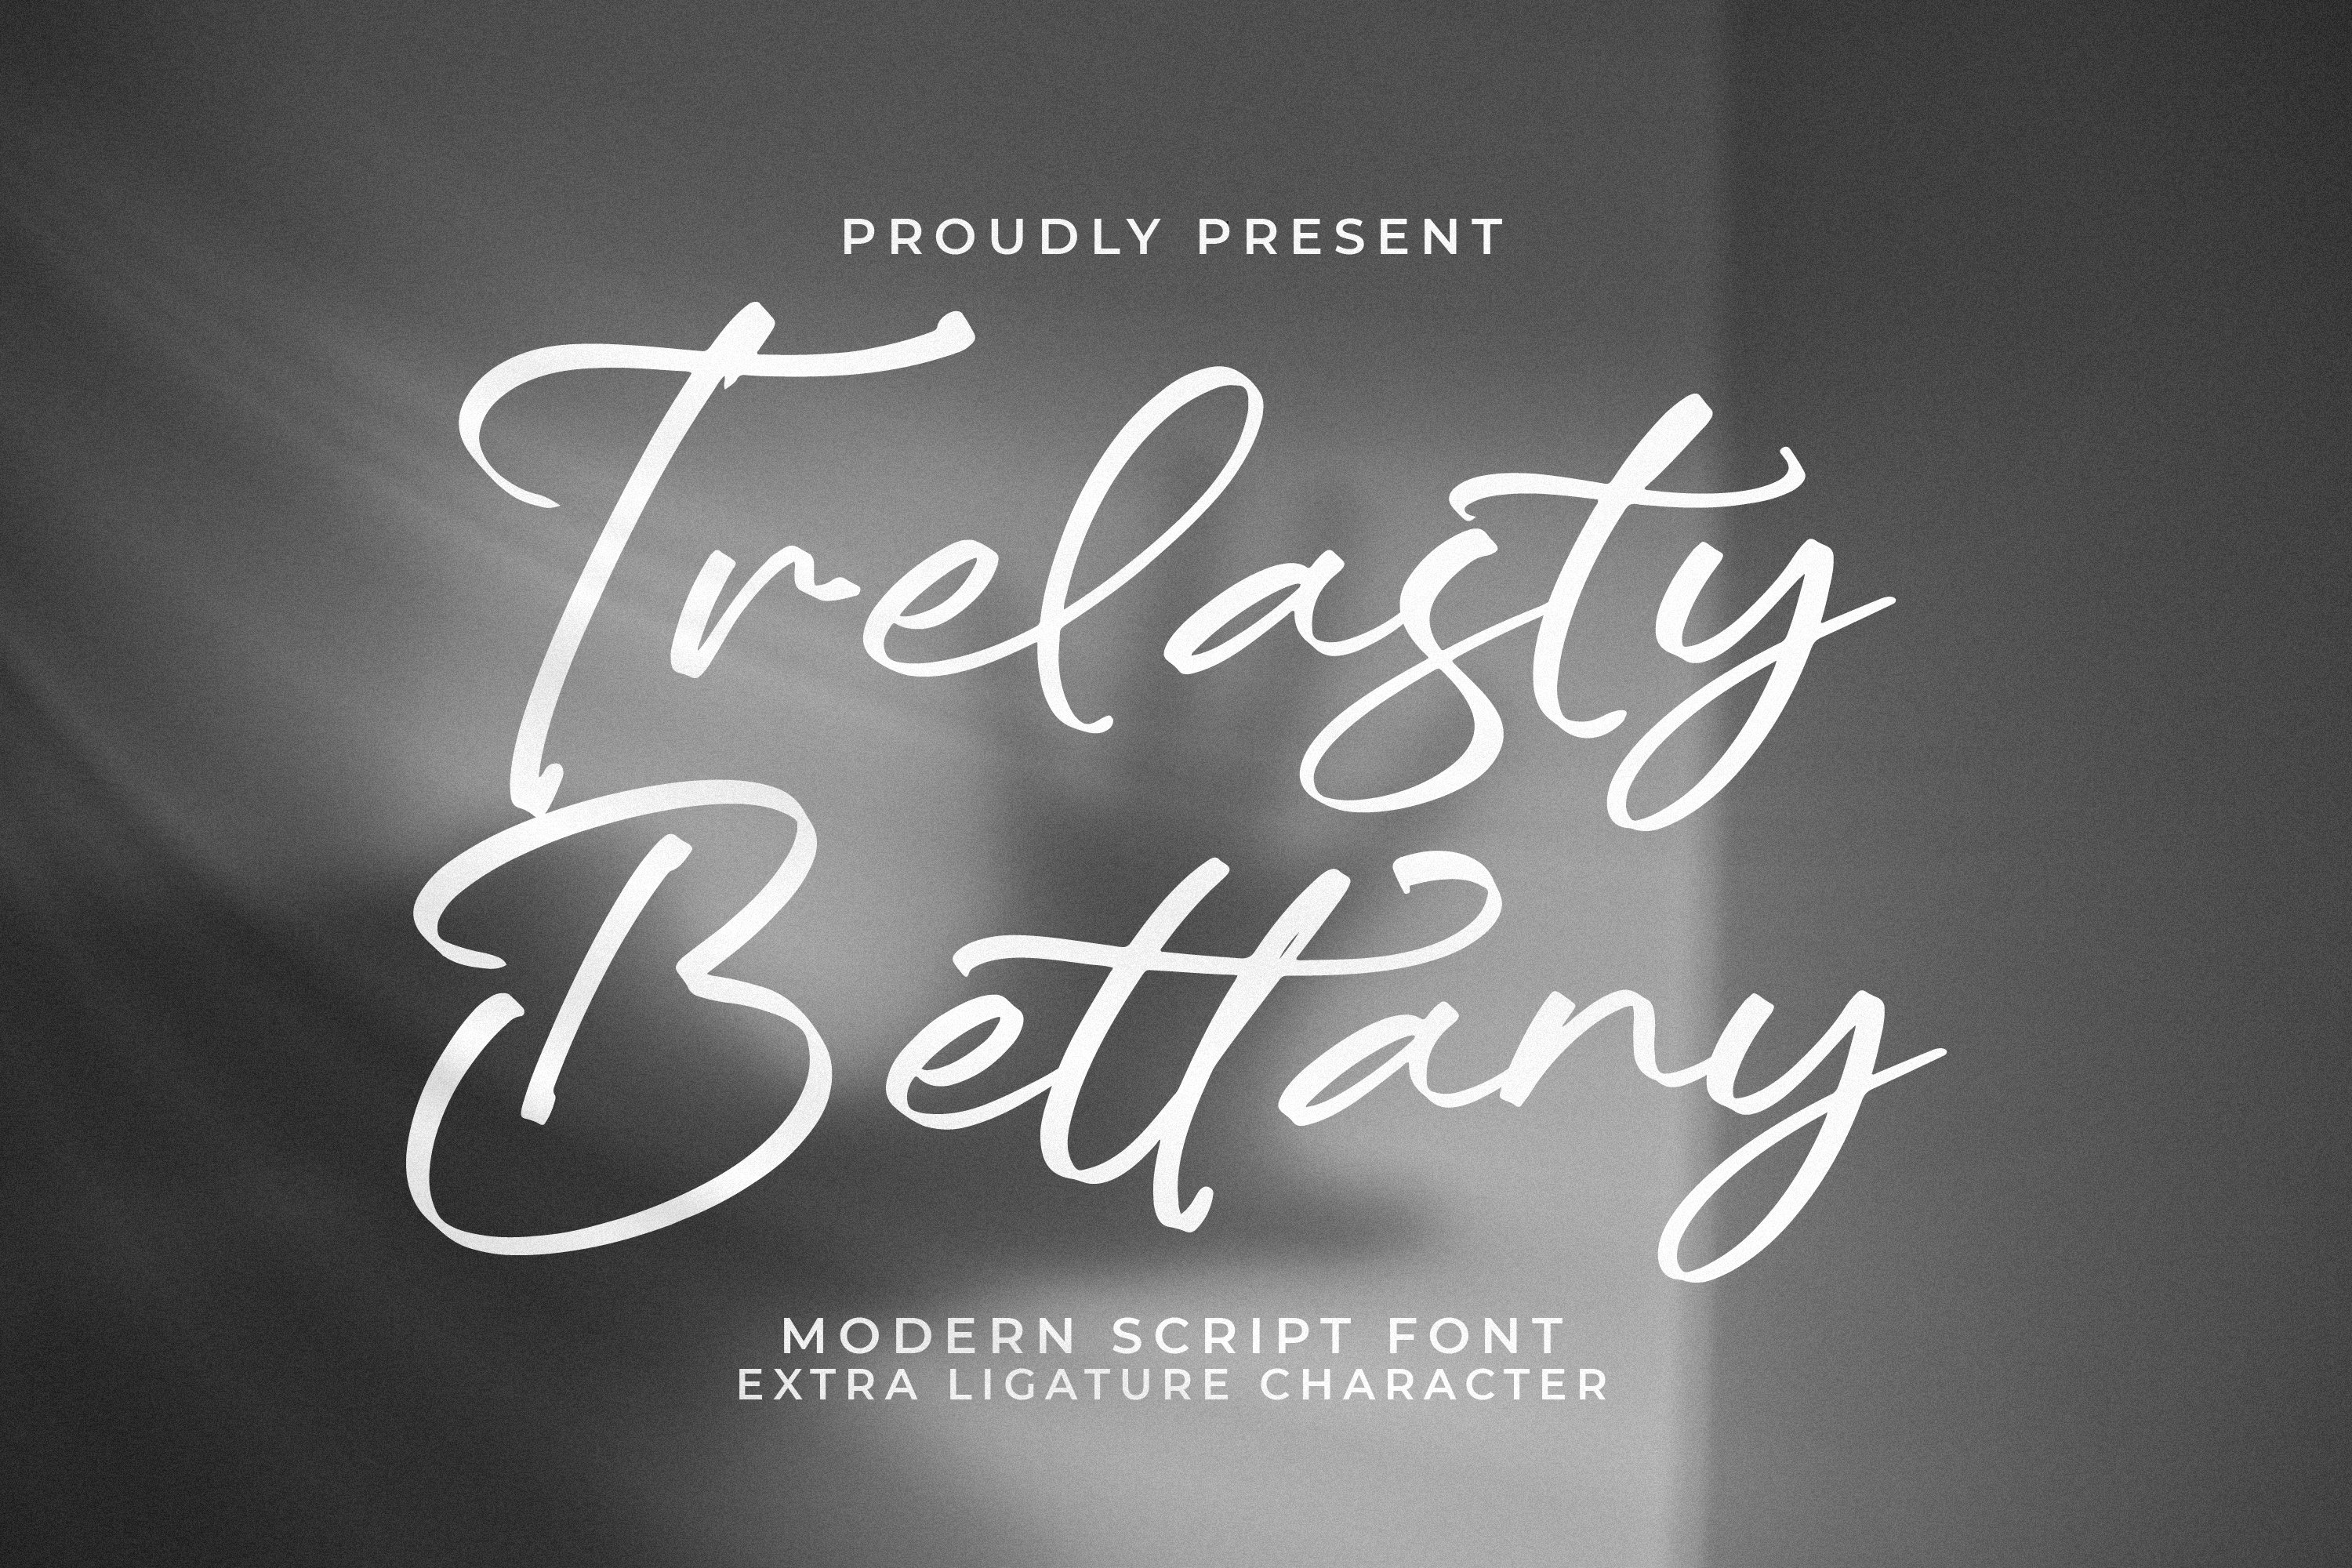 Trelasty Bettany